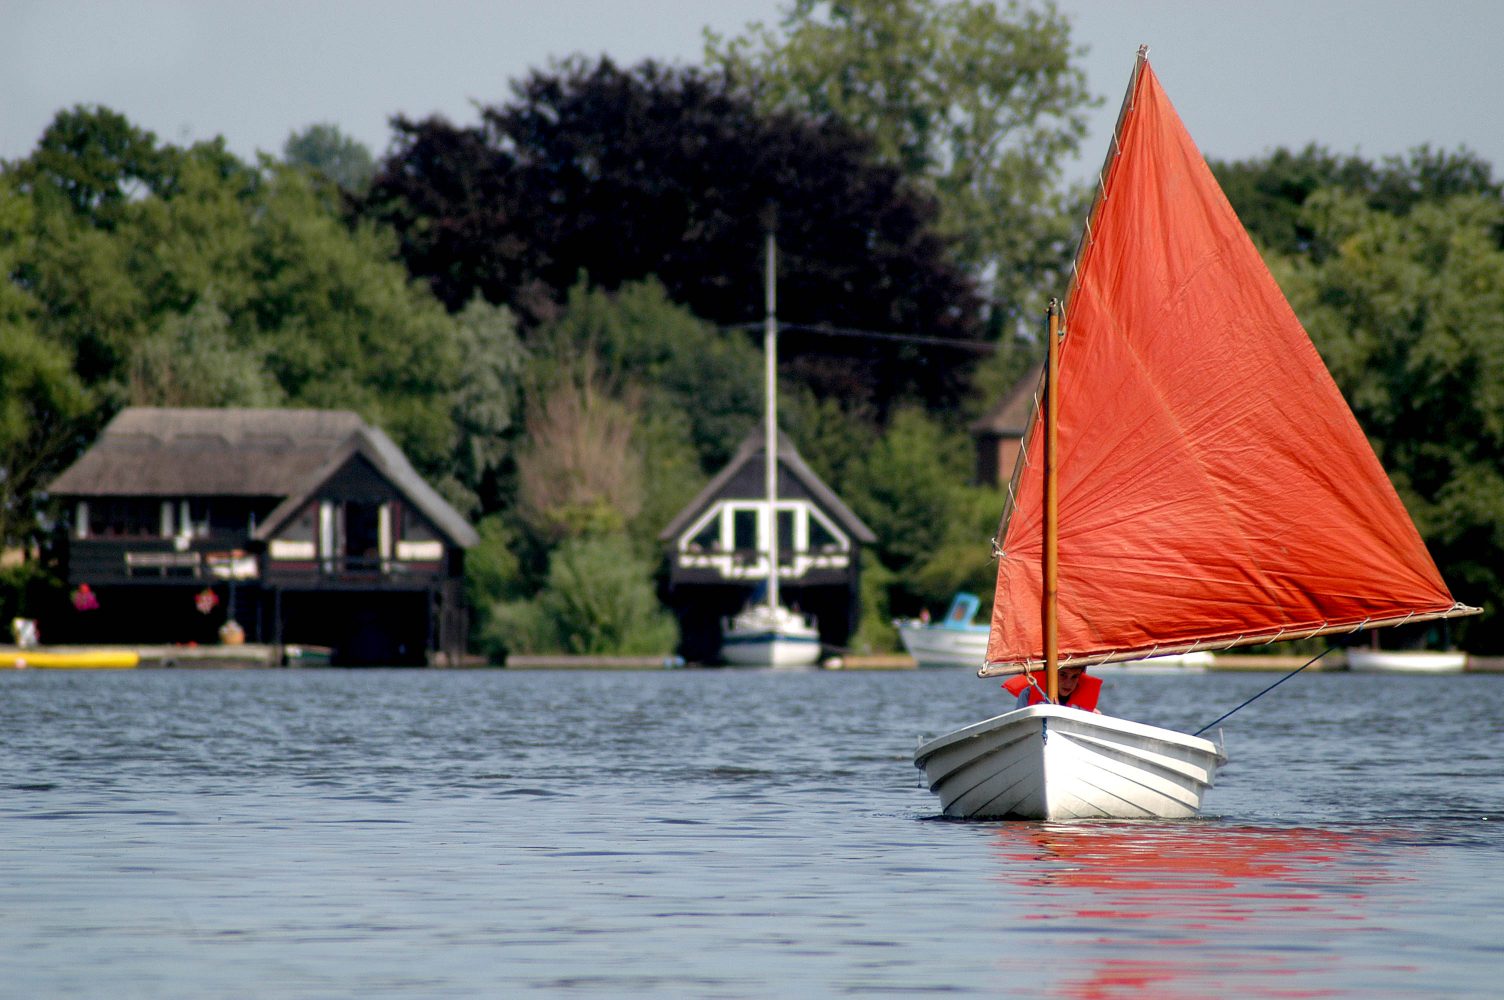 Enjoy sailing on the Norfolk Broads